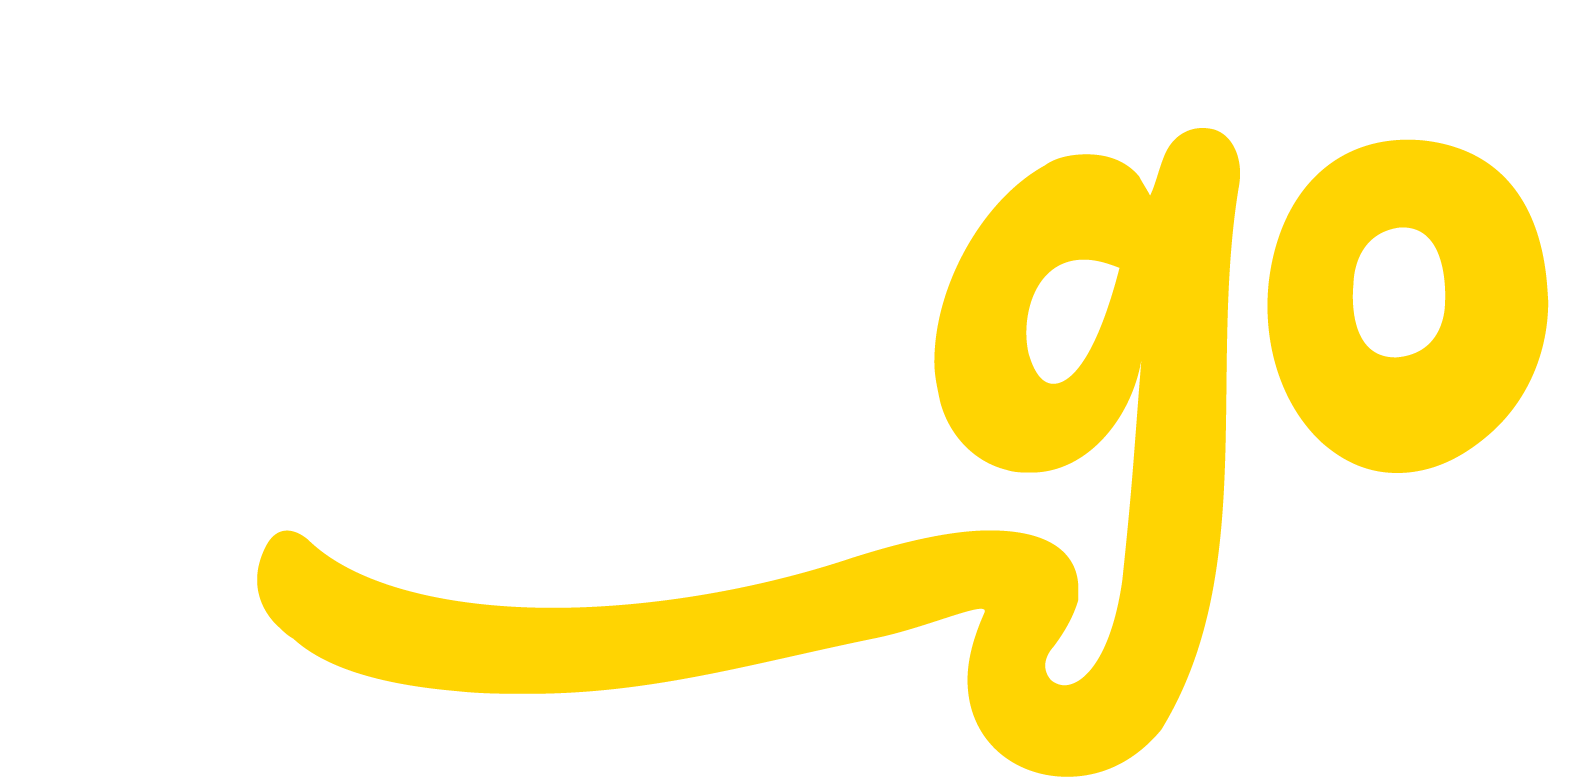 Lottogo